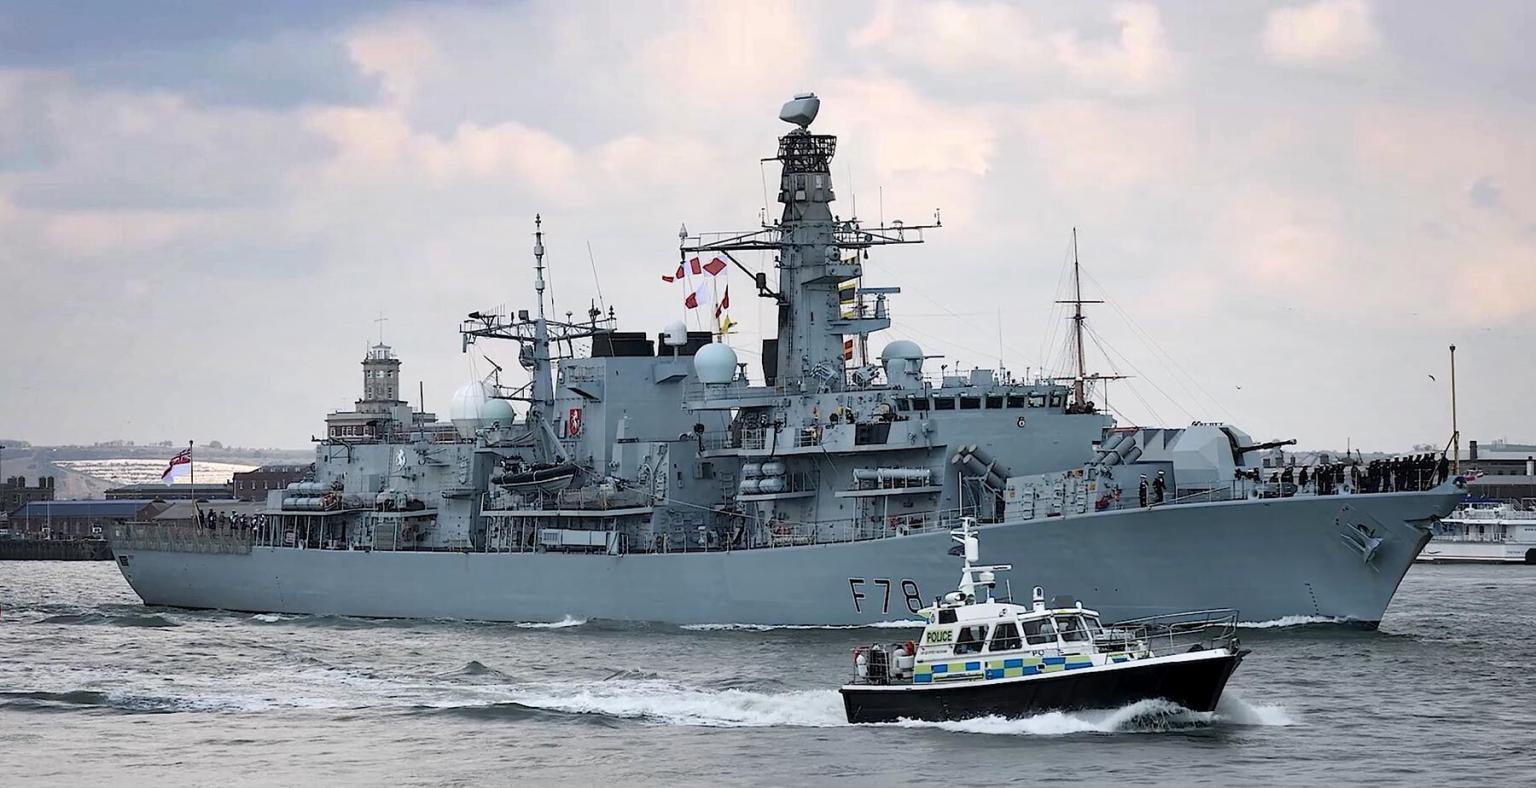 HMS-Kent-CSG-Departure-1536x788.jpg